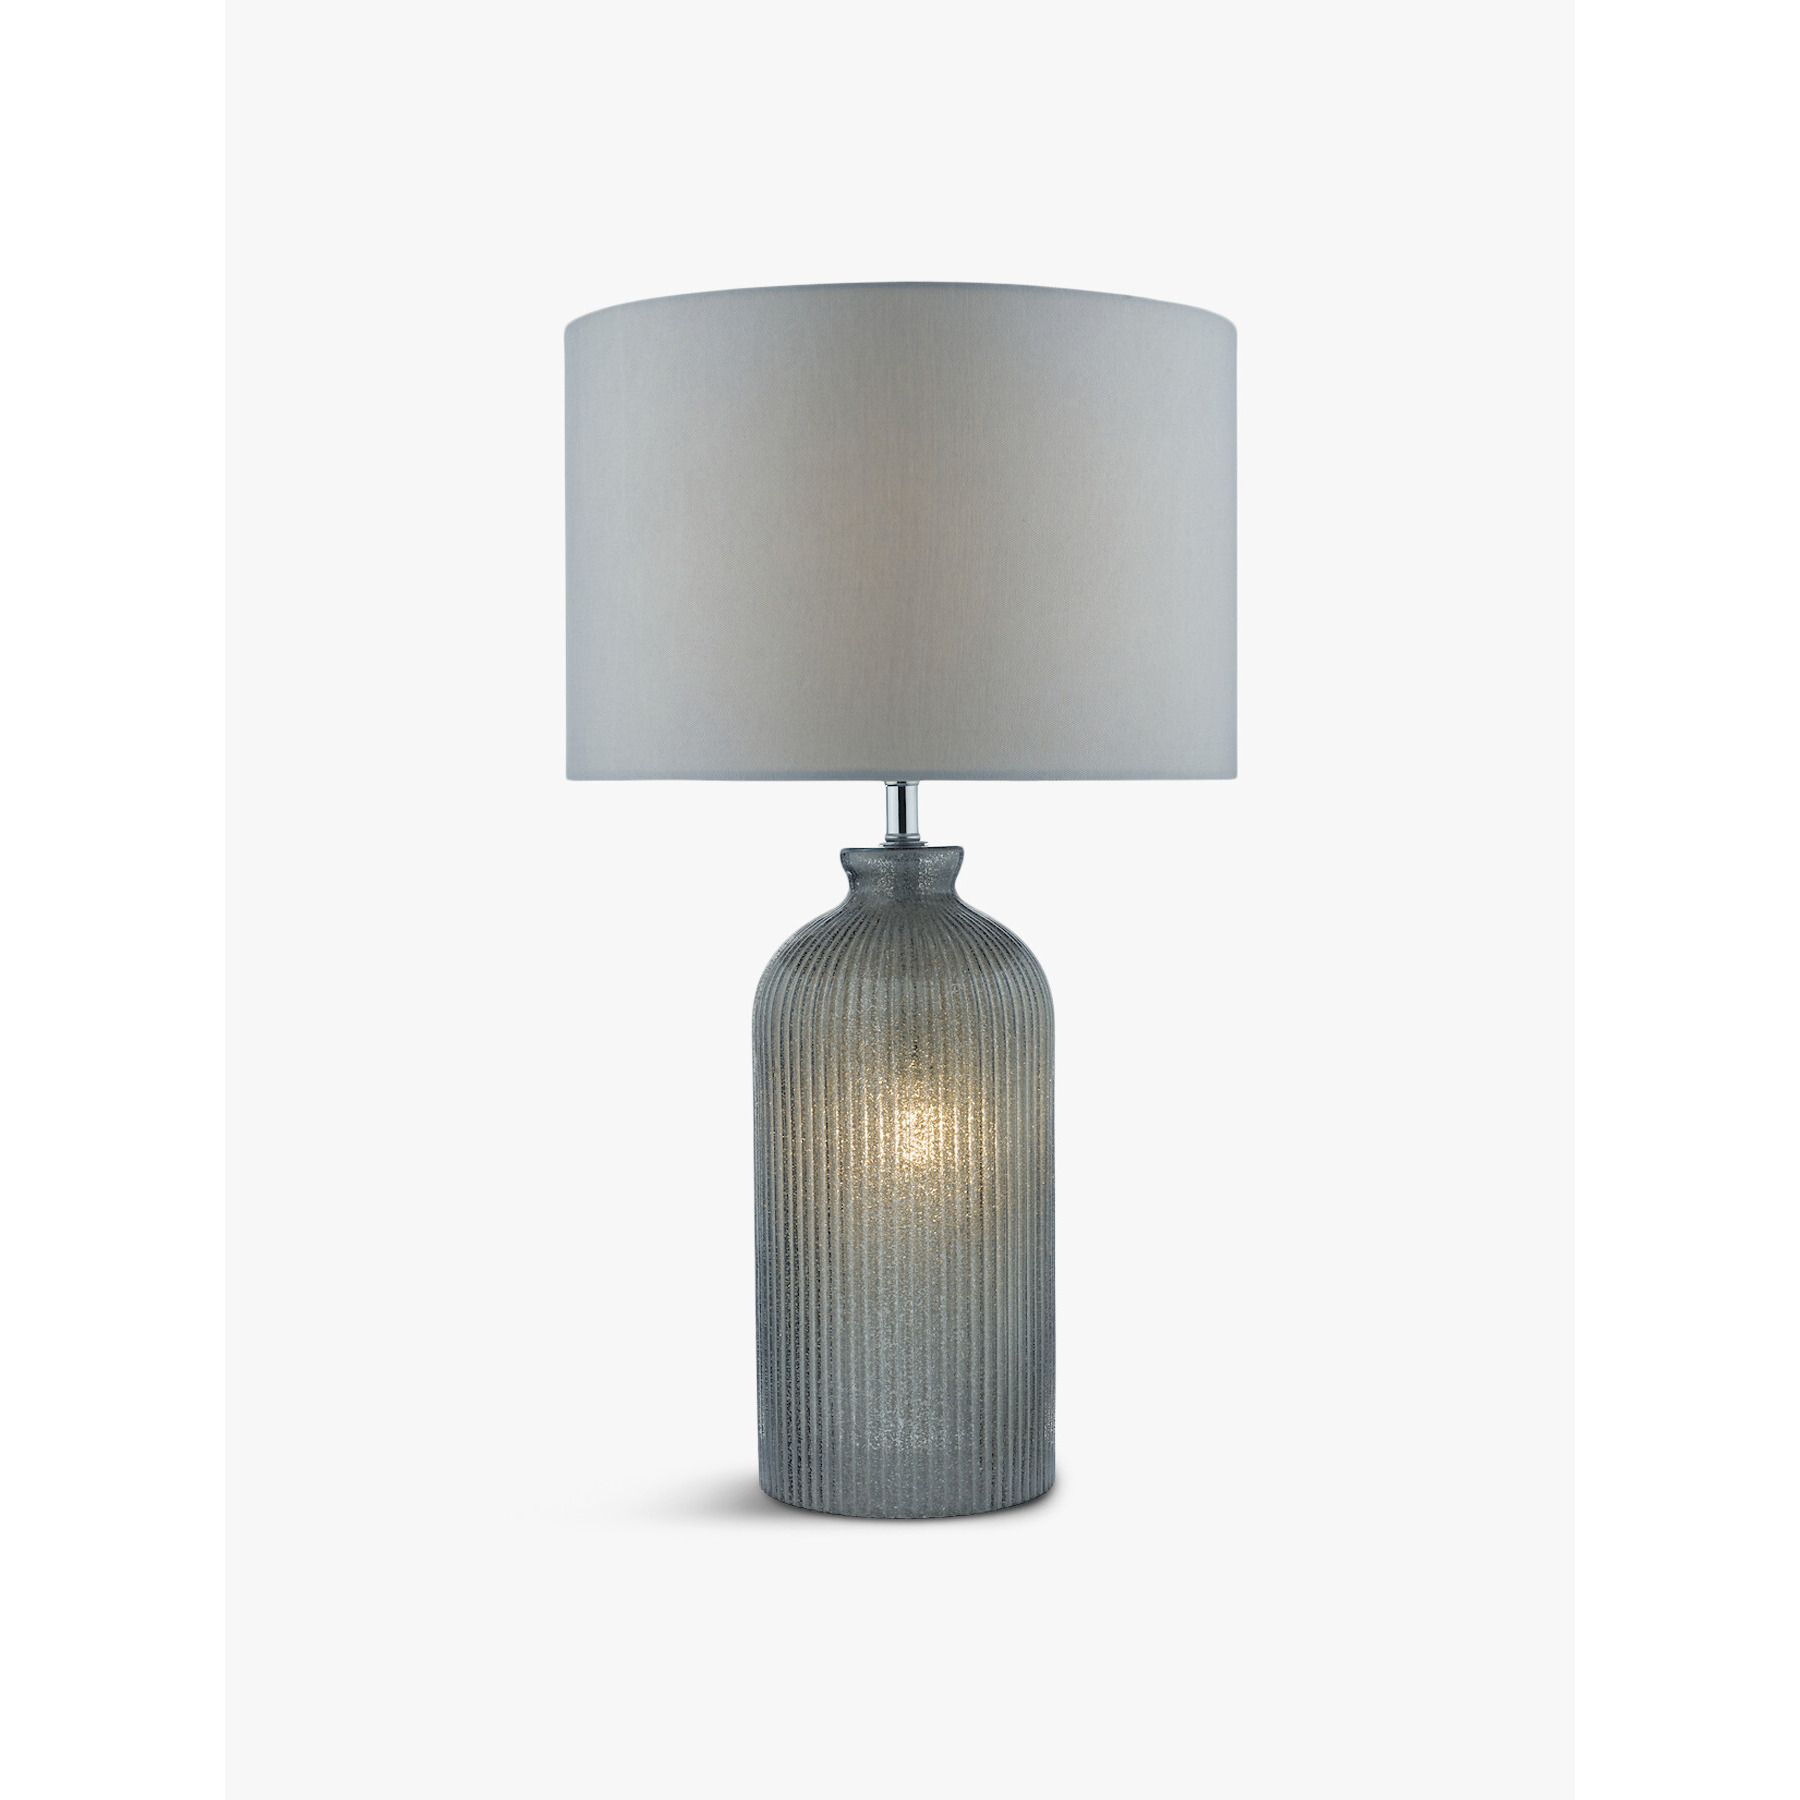 Dar Lighting Pamplona Table Lamp with Shade Grey - image 1